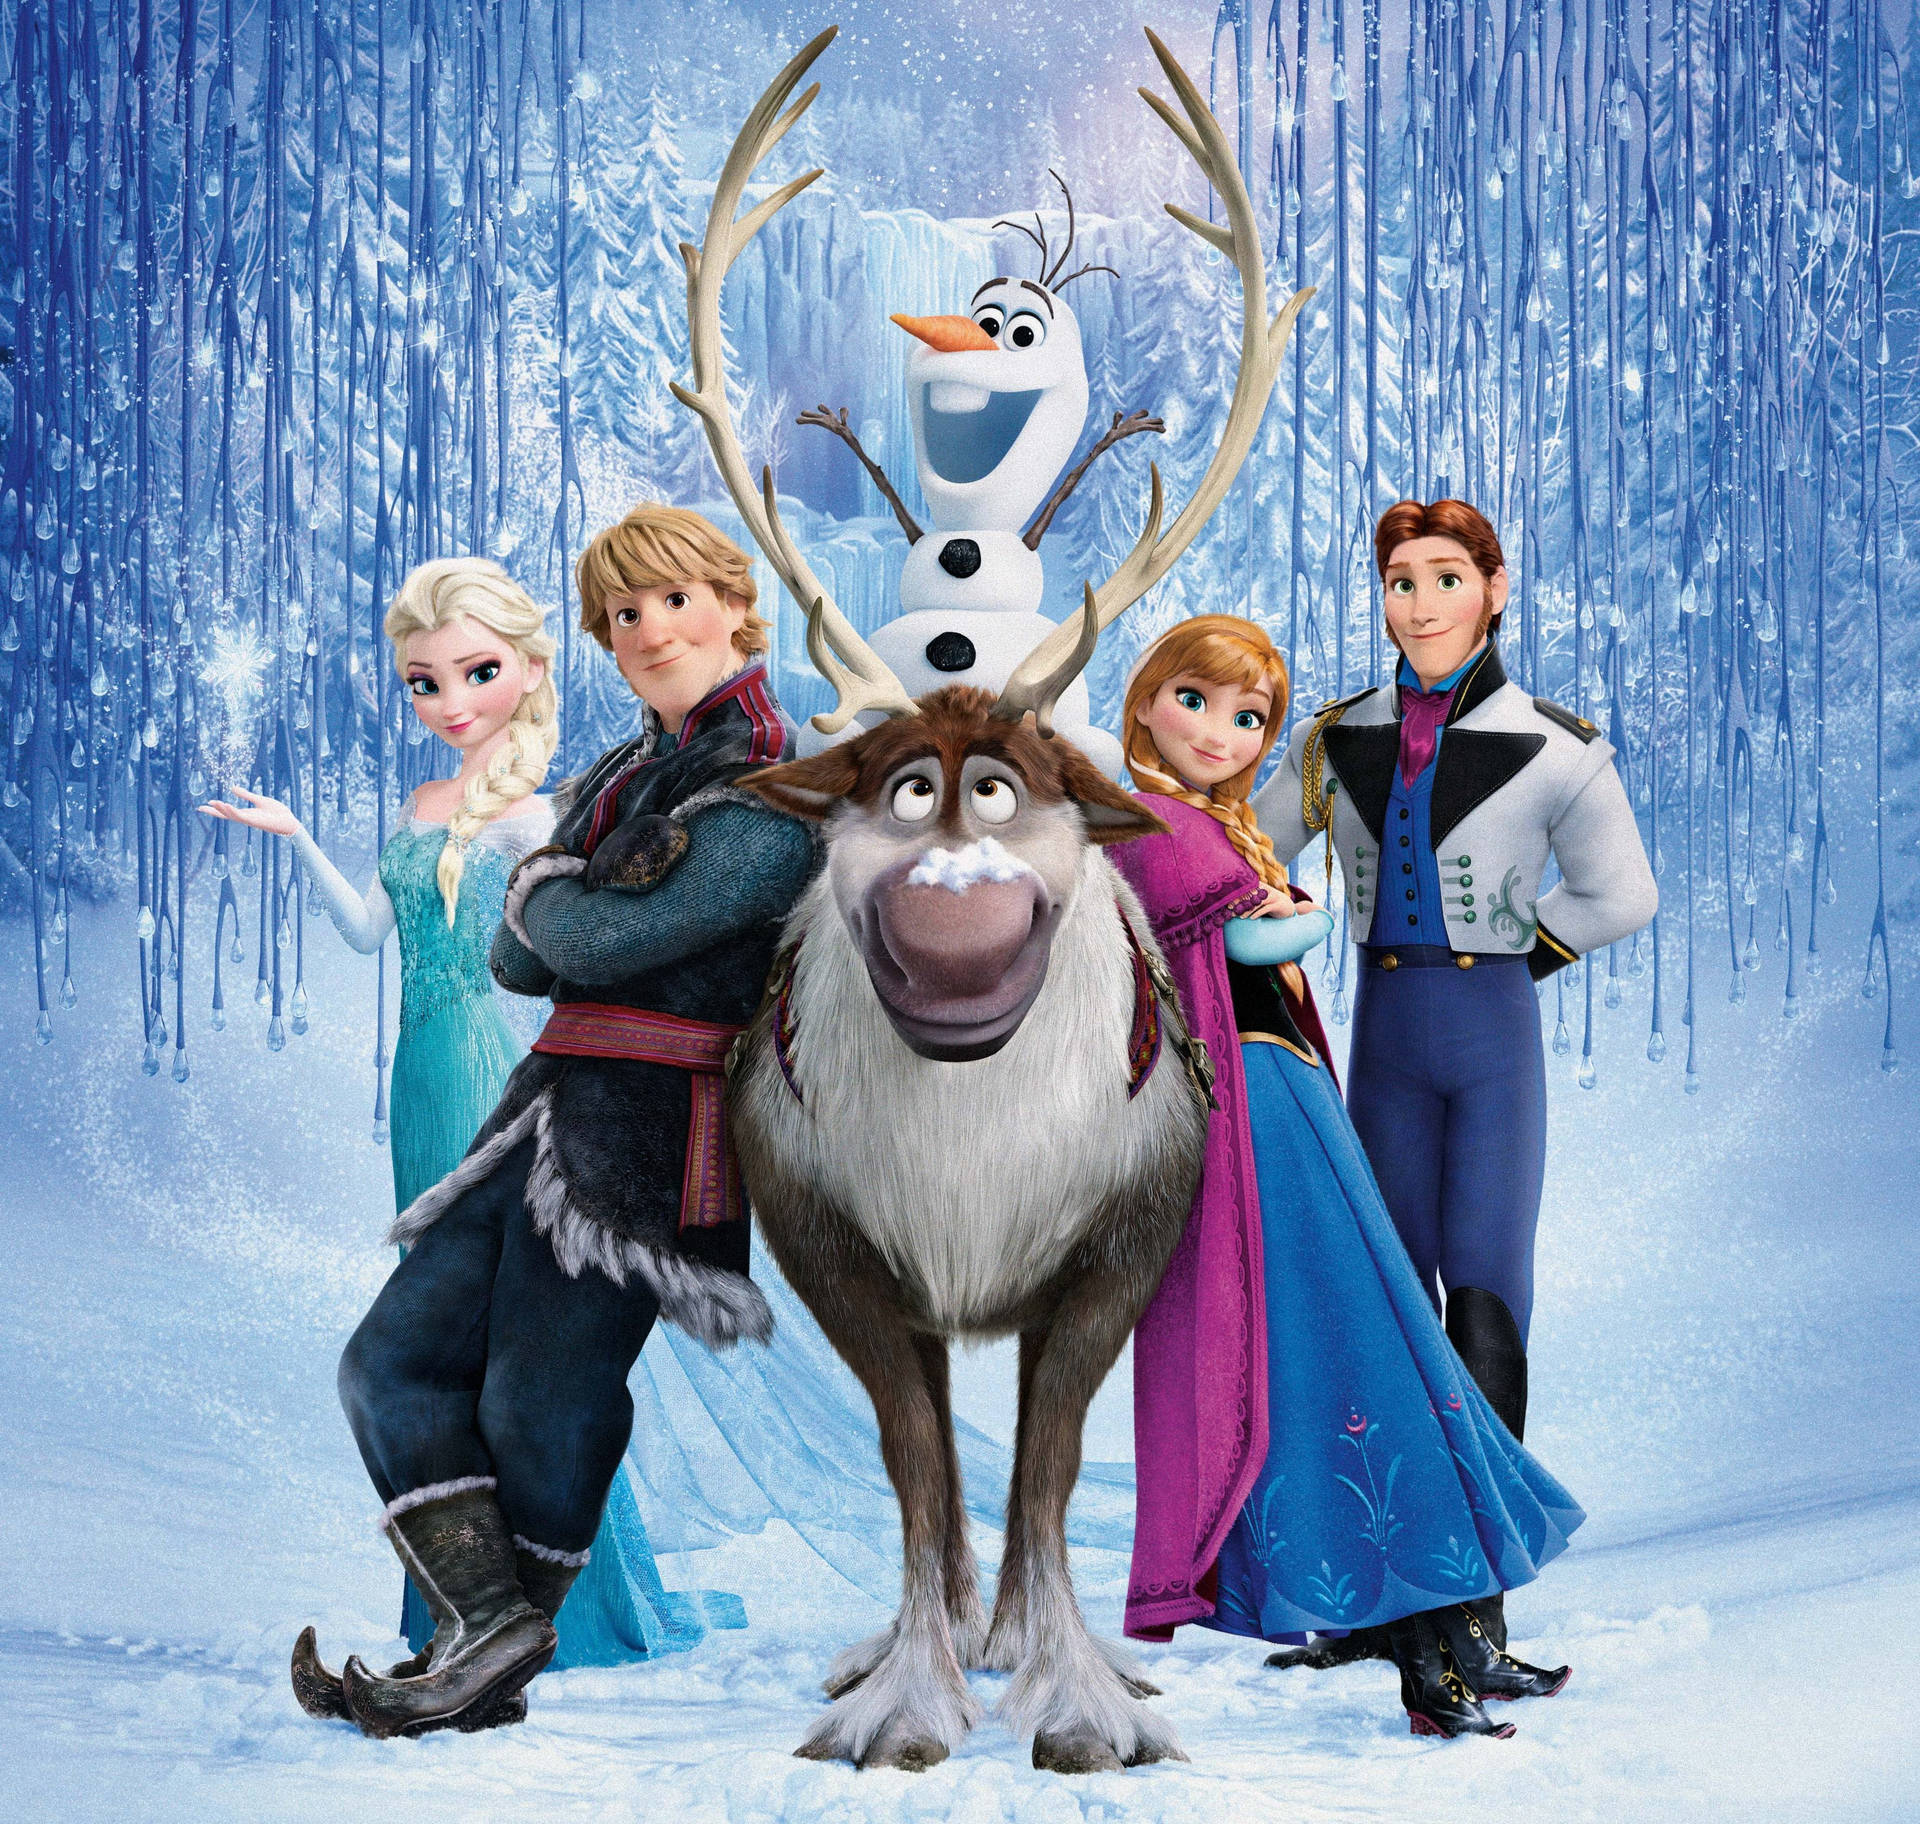 Frozen Elsa Characters Poster. Background